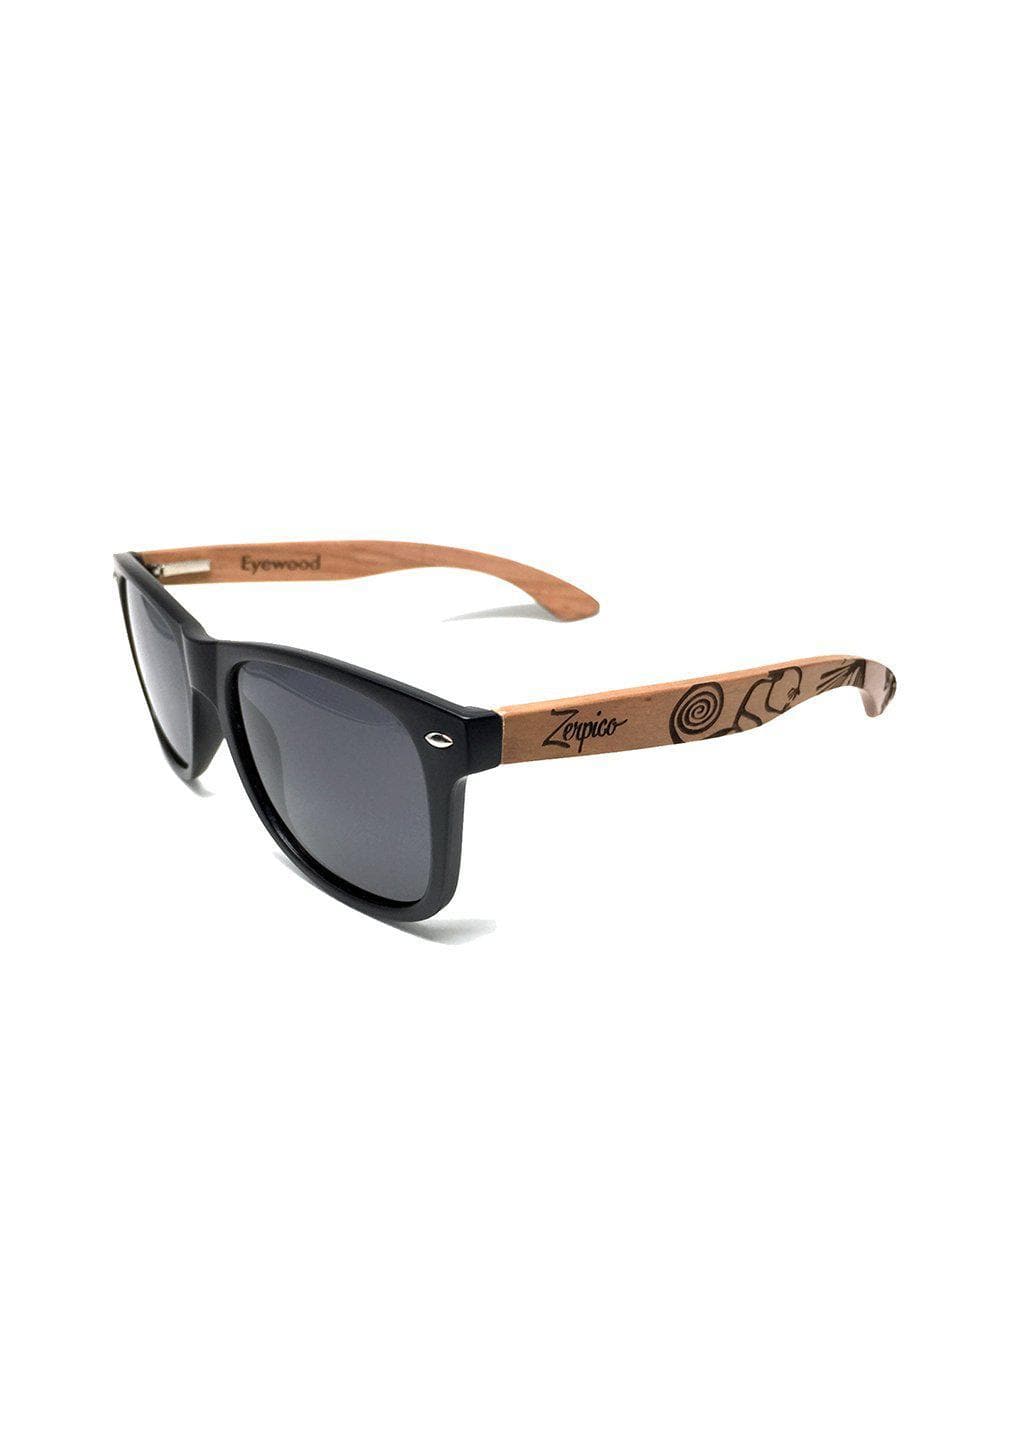 Eyewood | Engraved wooden sunglasses - Native-7